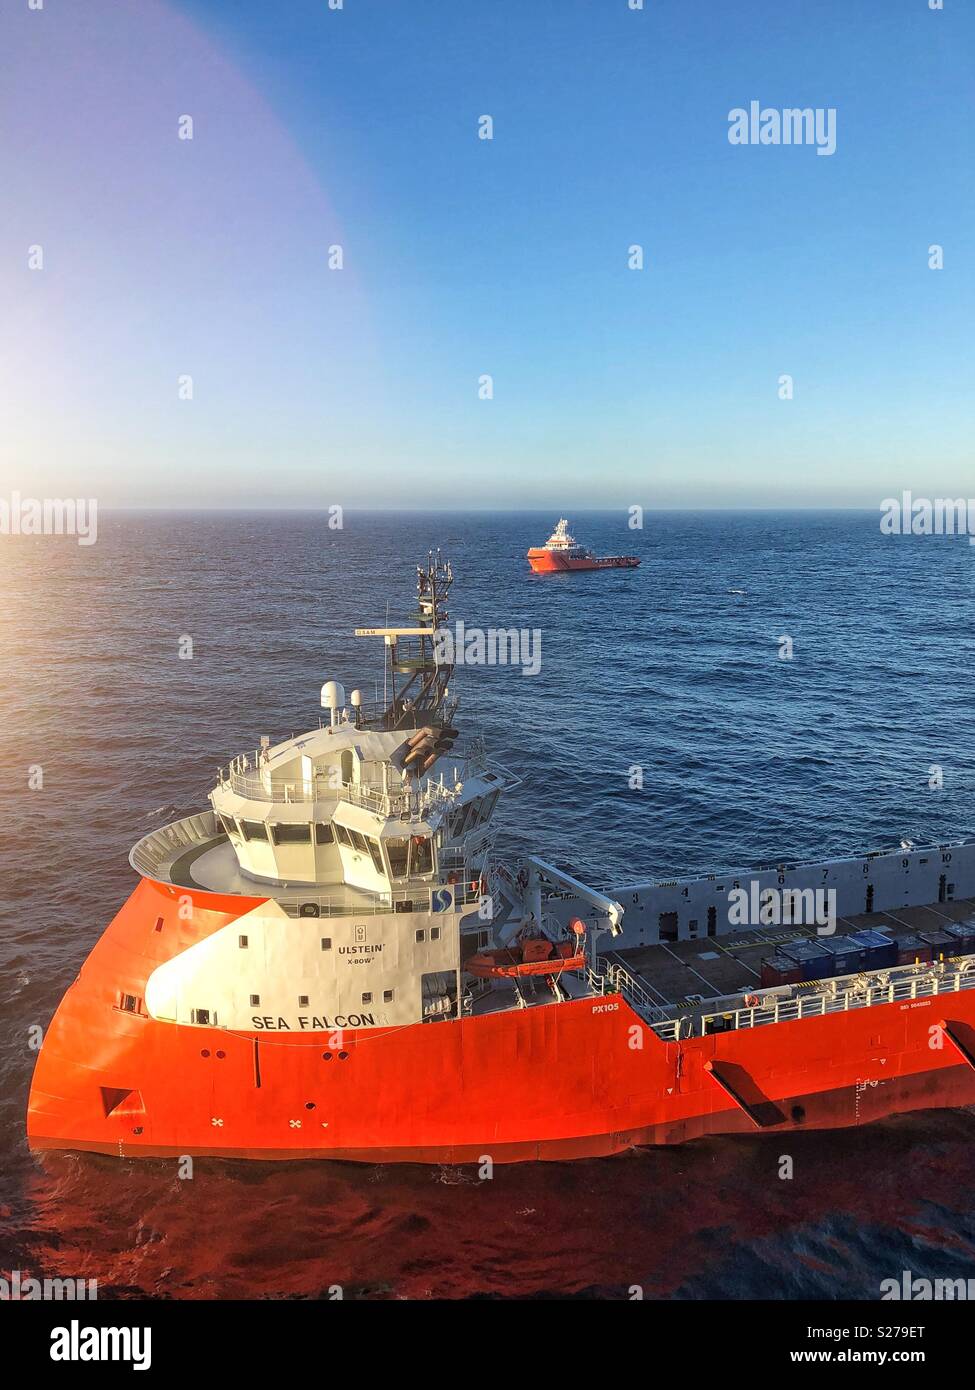 Sea Falcon supply vessel. Credit: Lee Ramsden / Alamy Stock Photo